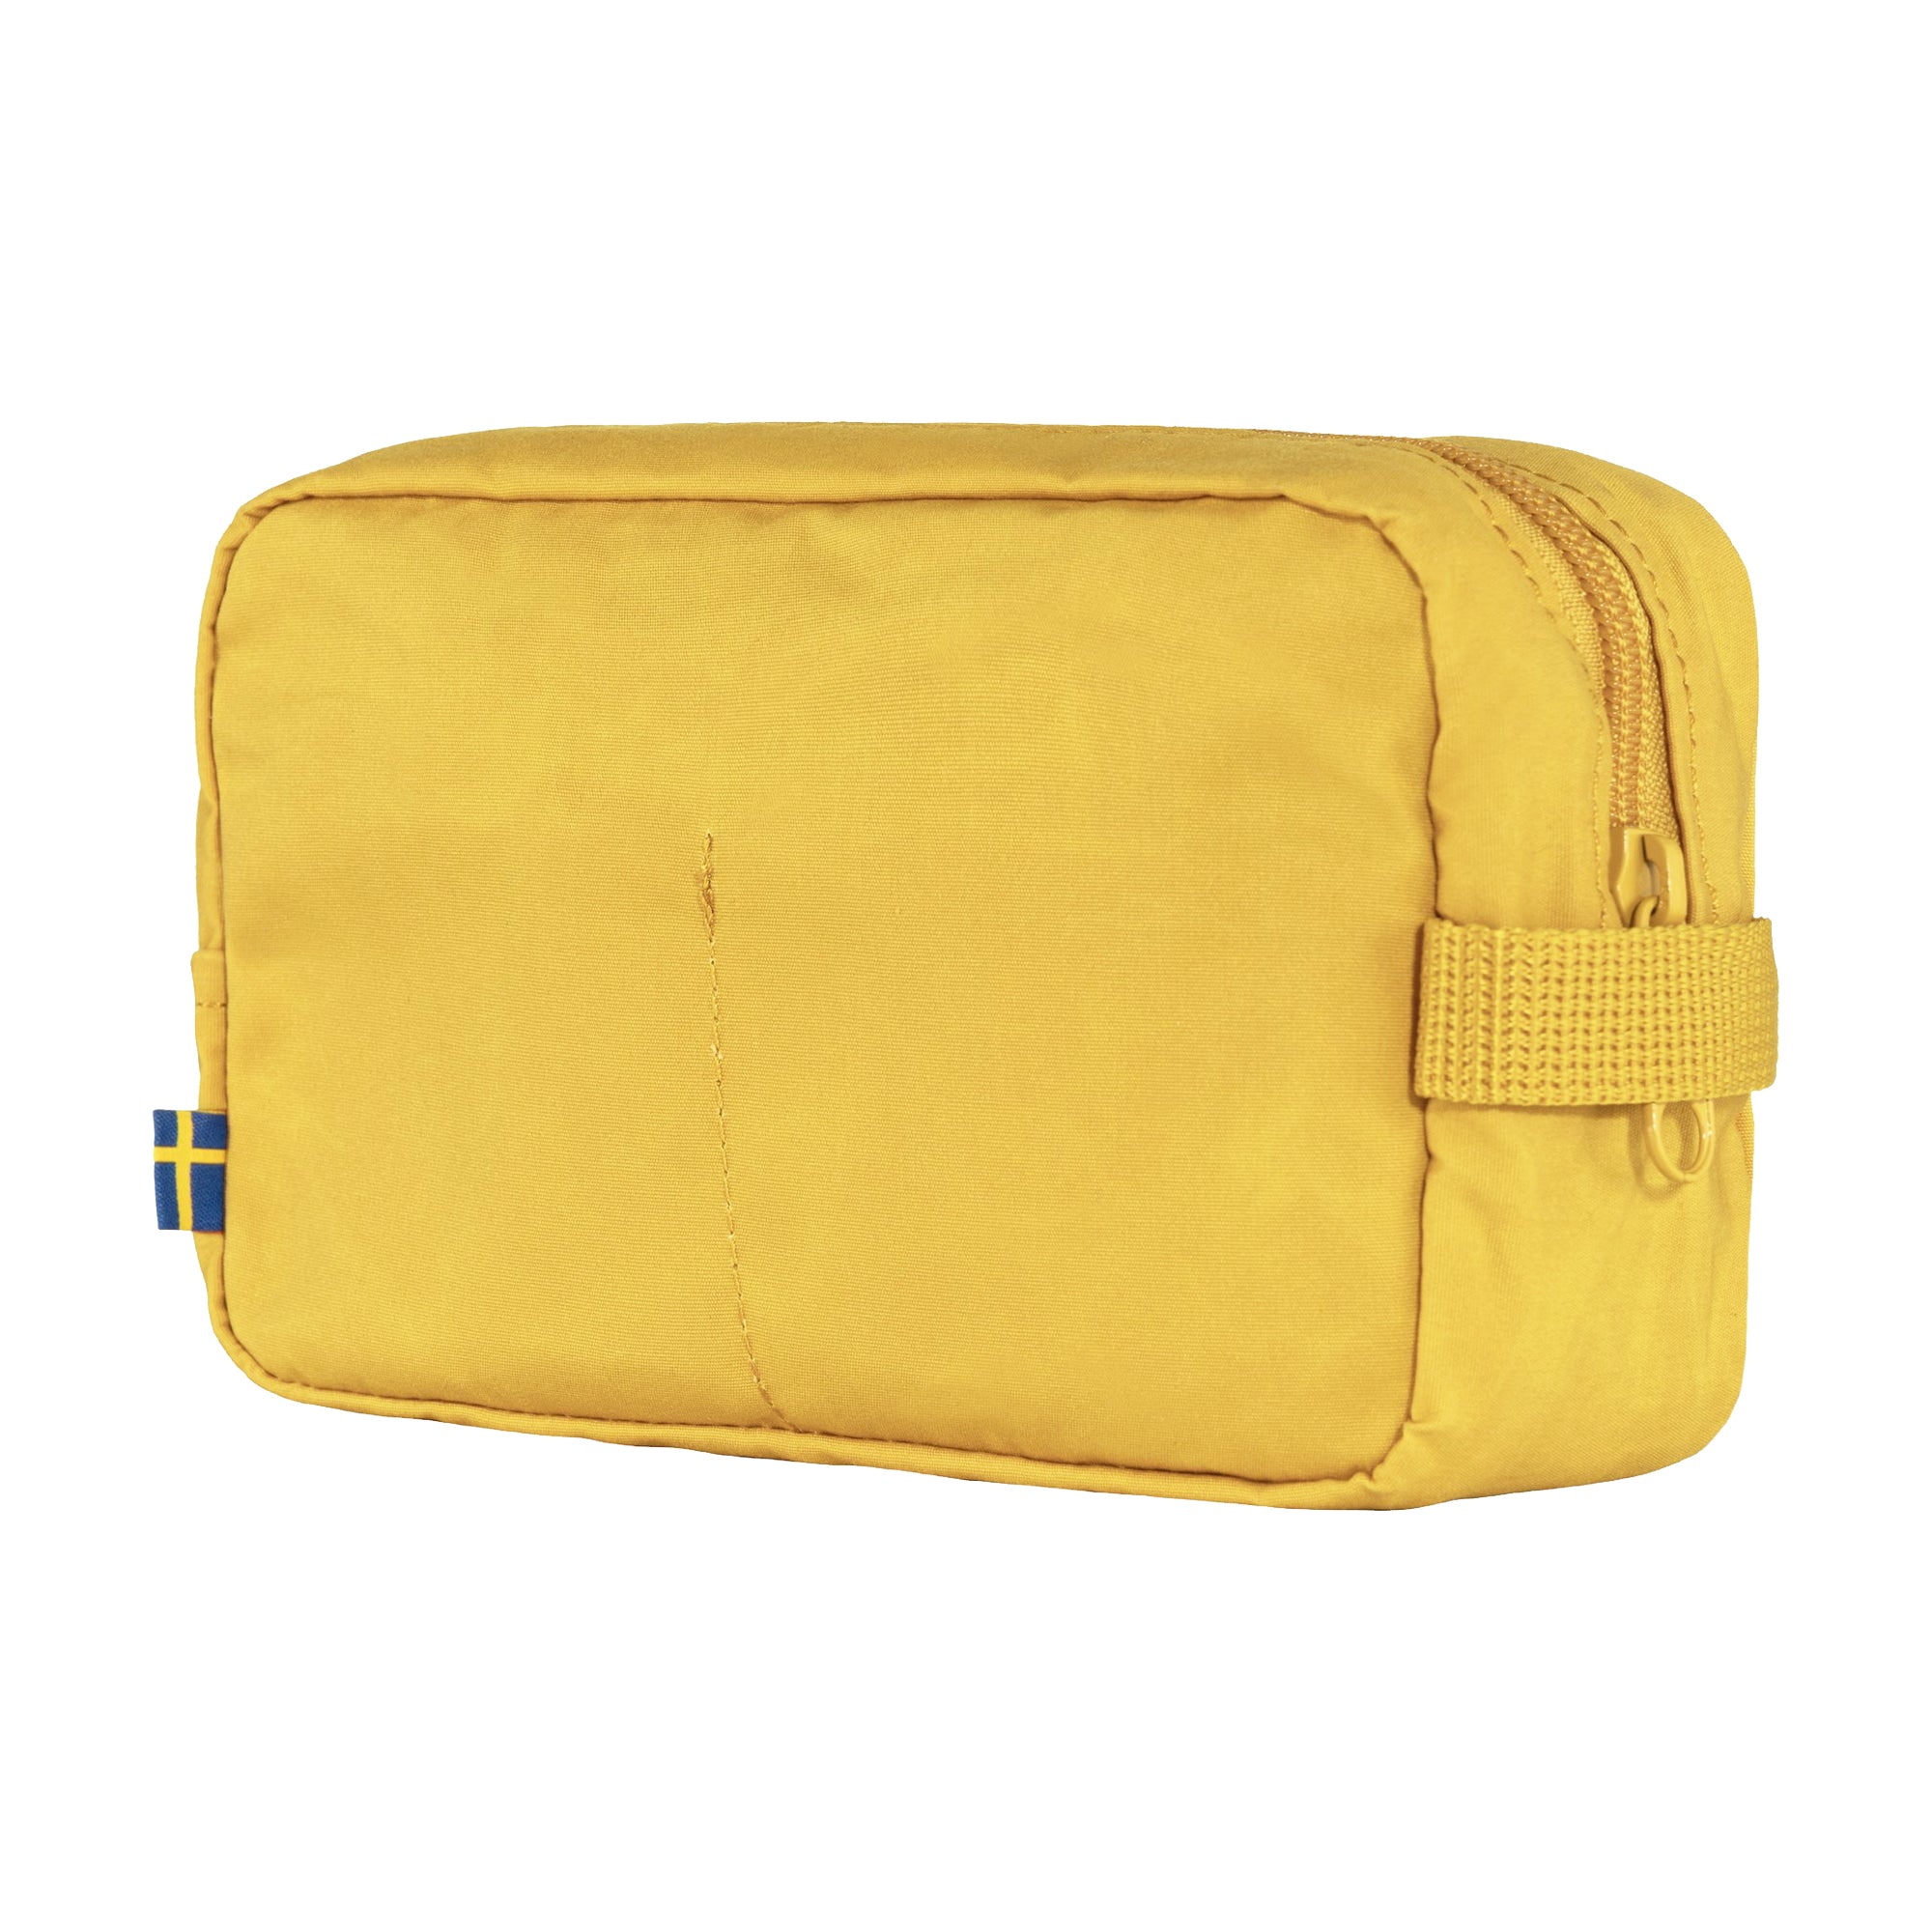 Fjallraven Kanken Gear Bag - Warm Yellow